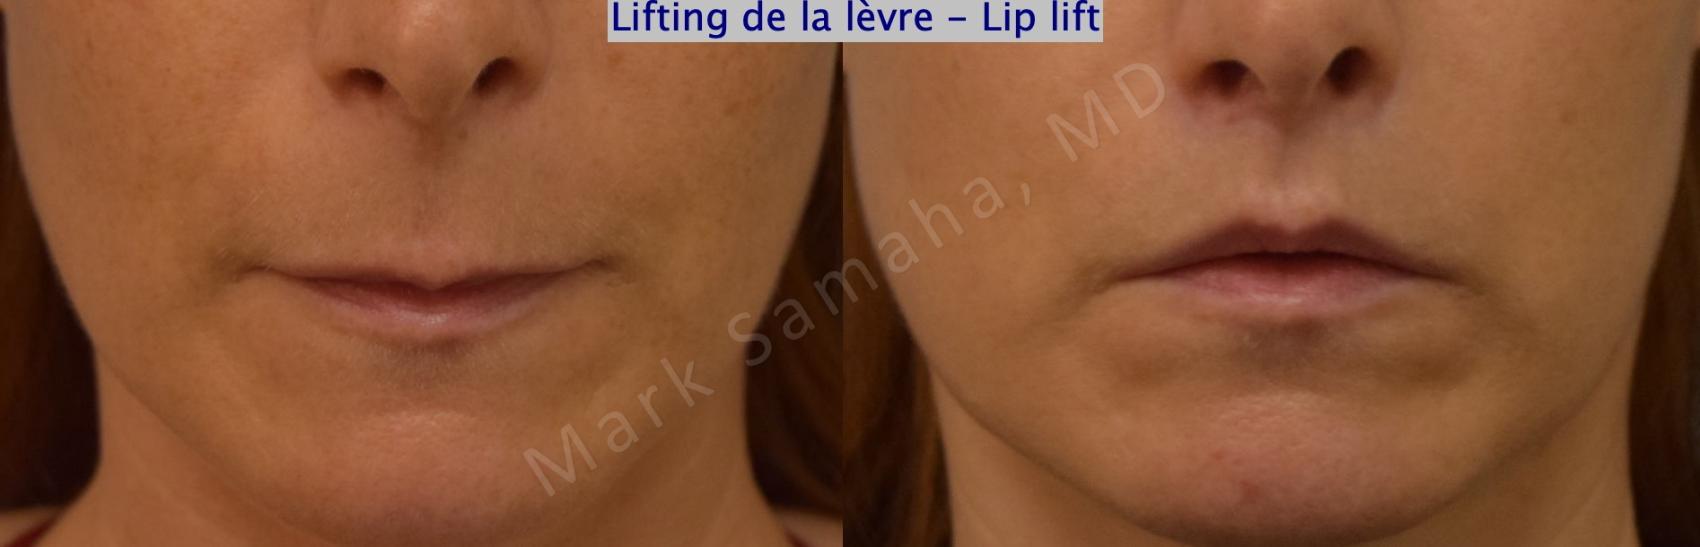 Before & After Lifting de la lèvre supérieure / Lip Lift Case 197 Front View in Montreal, QC